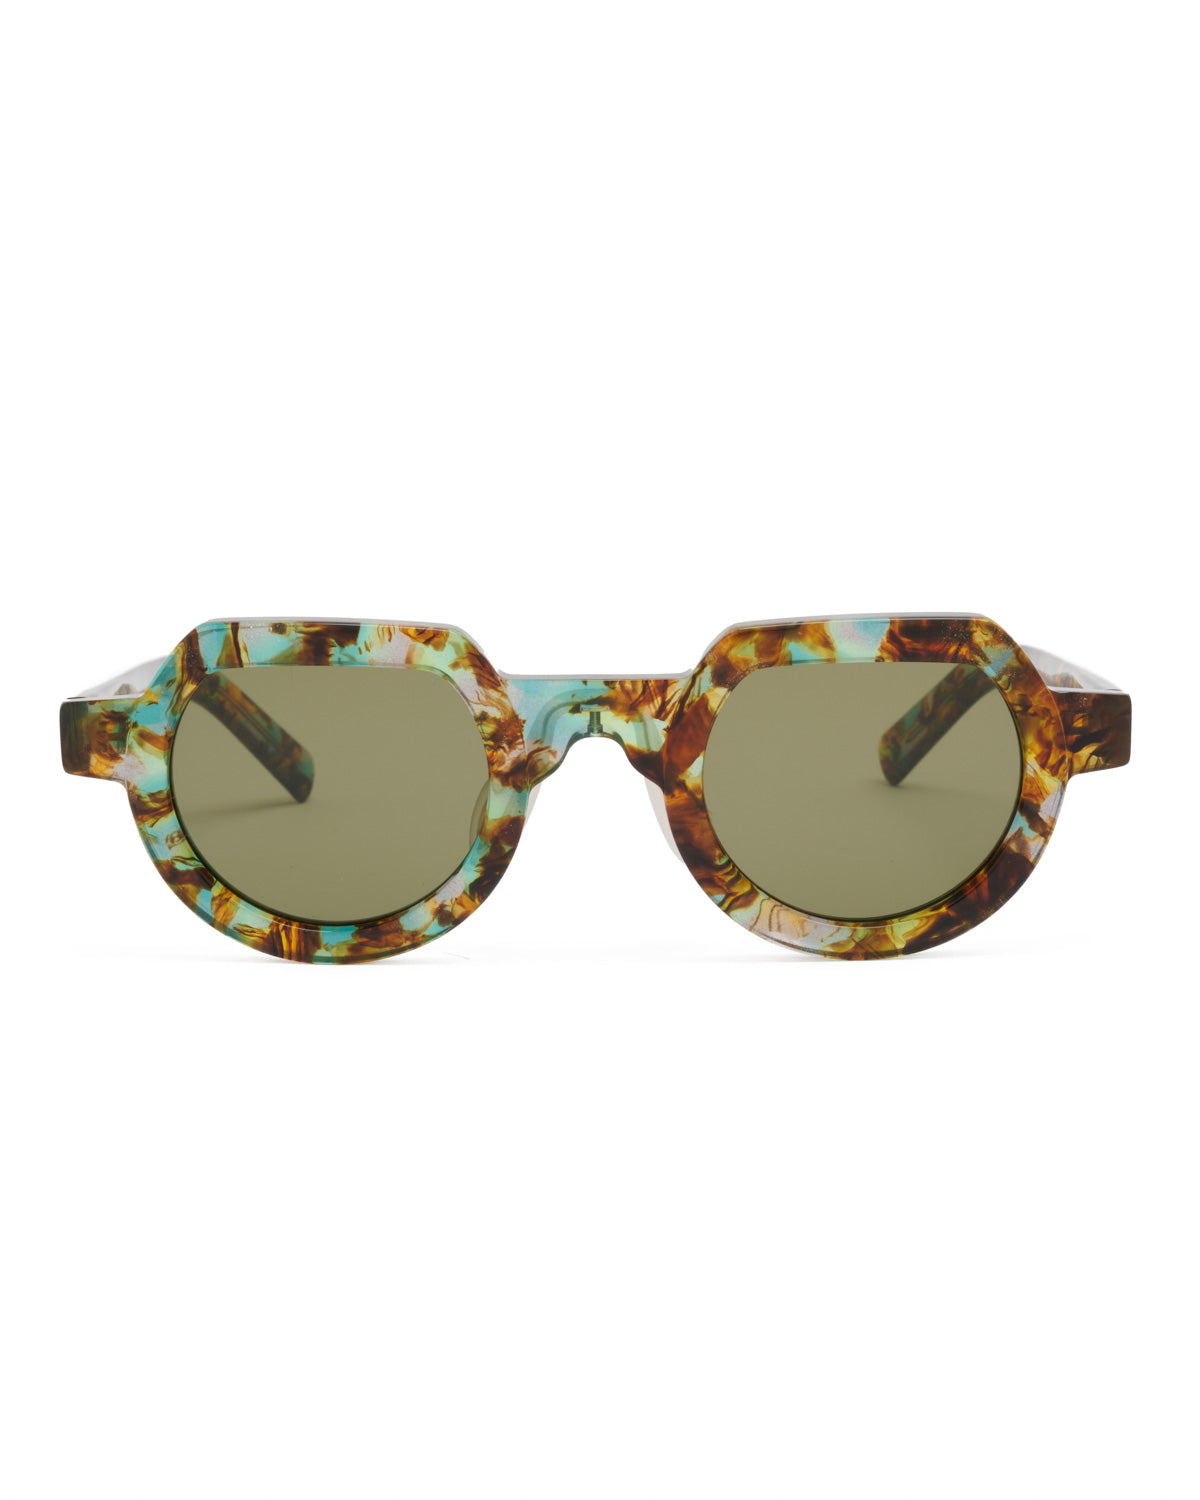 Tani Post Modern Primitive Eye Protection Sunglasses - Forrest/Green 1